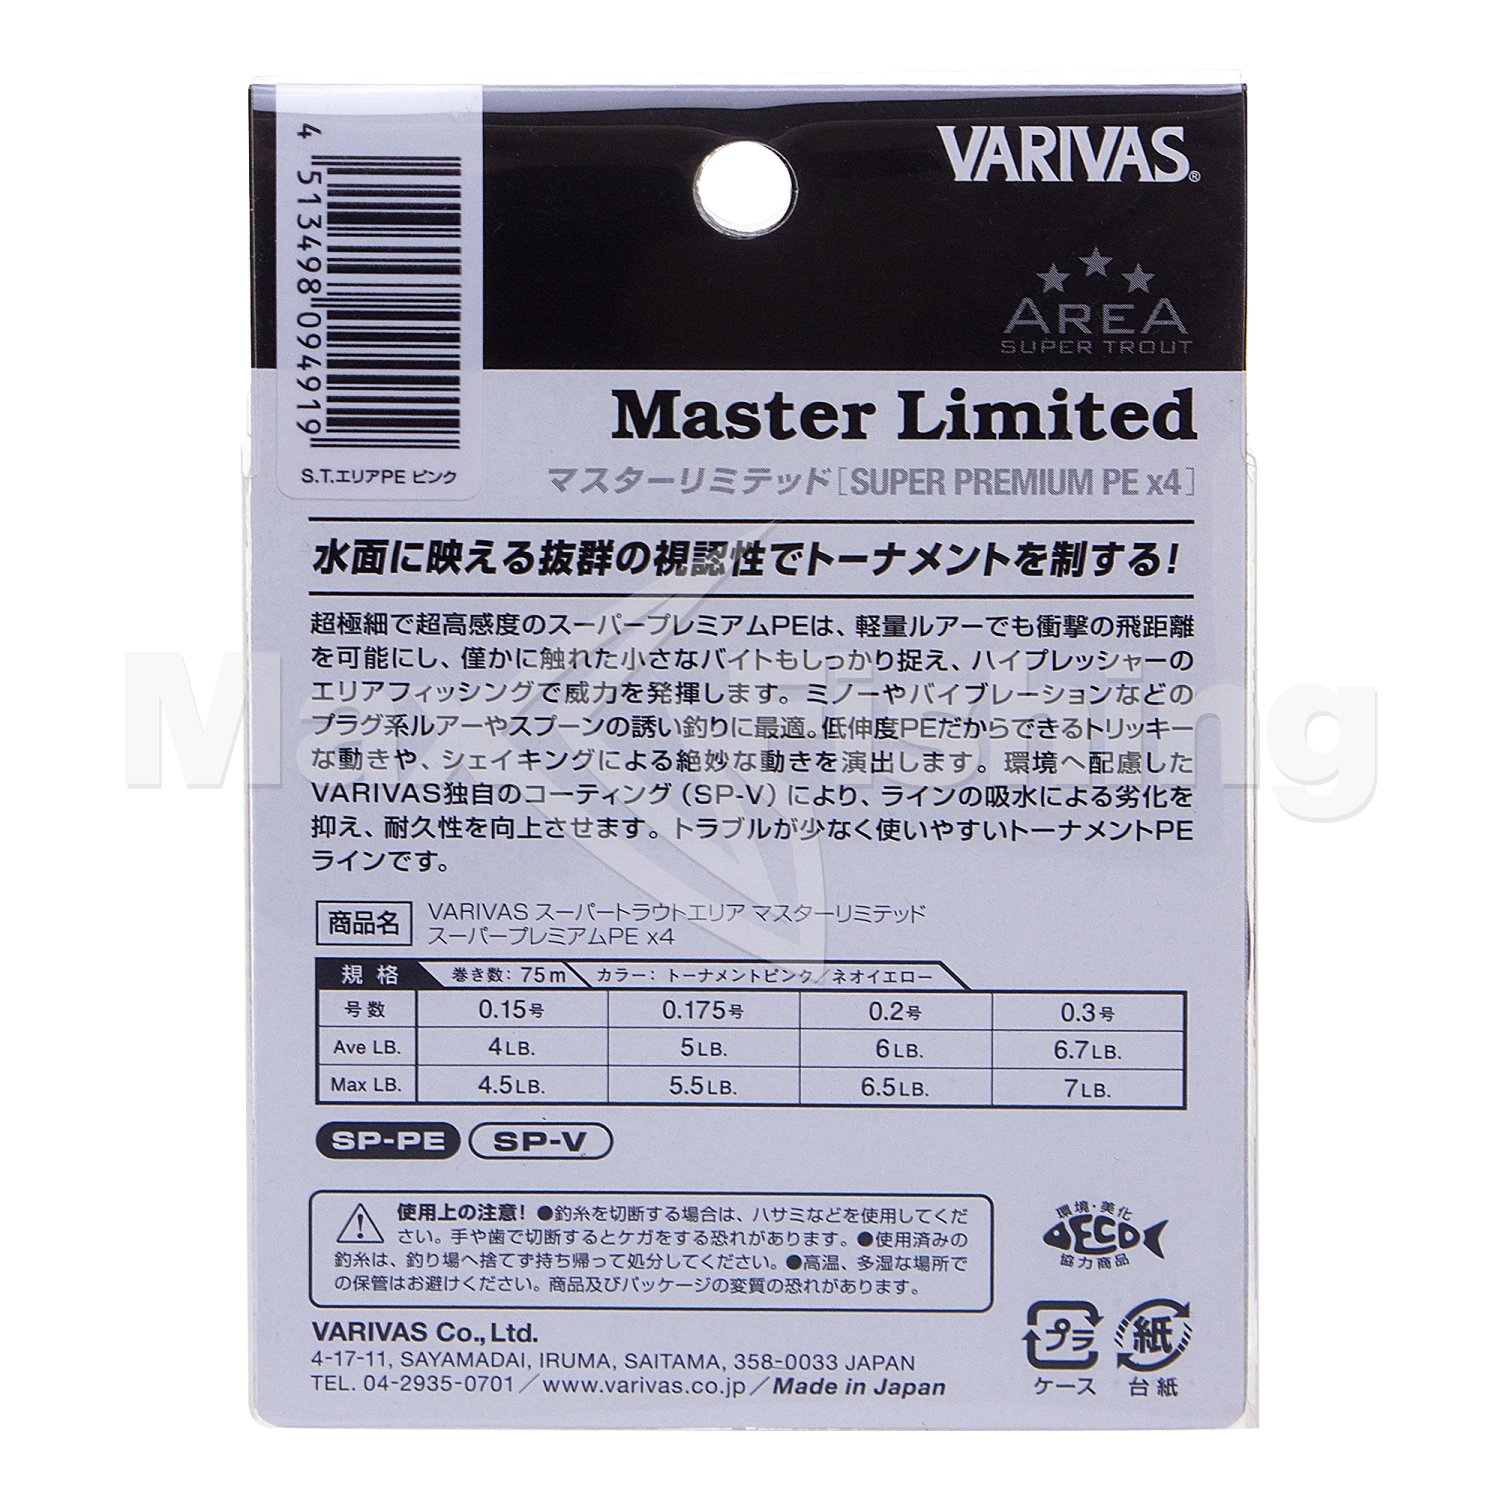 Шнур плетеный Varivas Area Super Trout Master Limited Super Premium PE X4 #0,15 0,065мм 75м (pink)